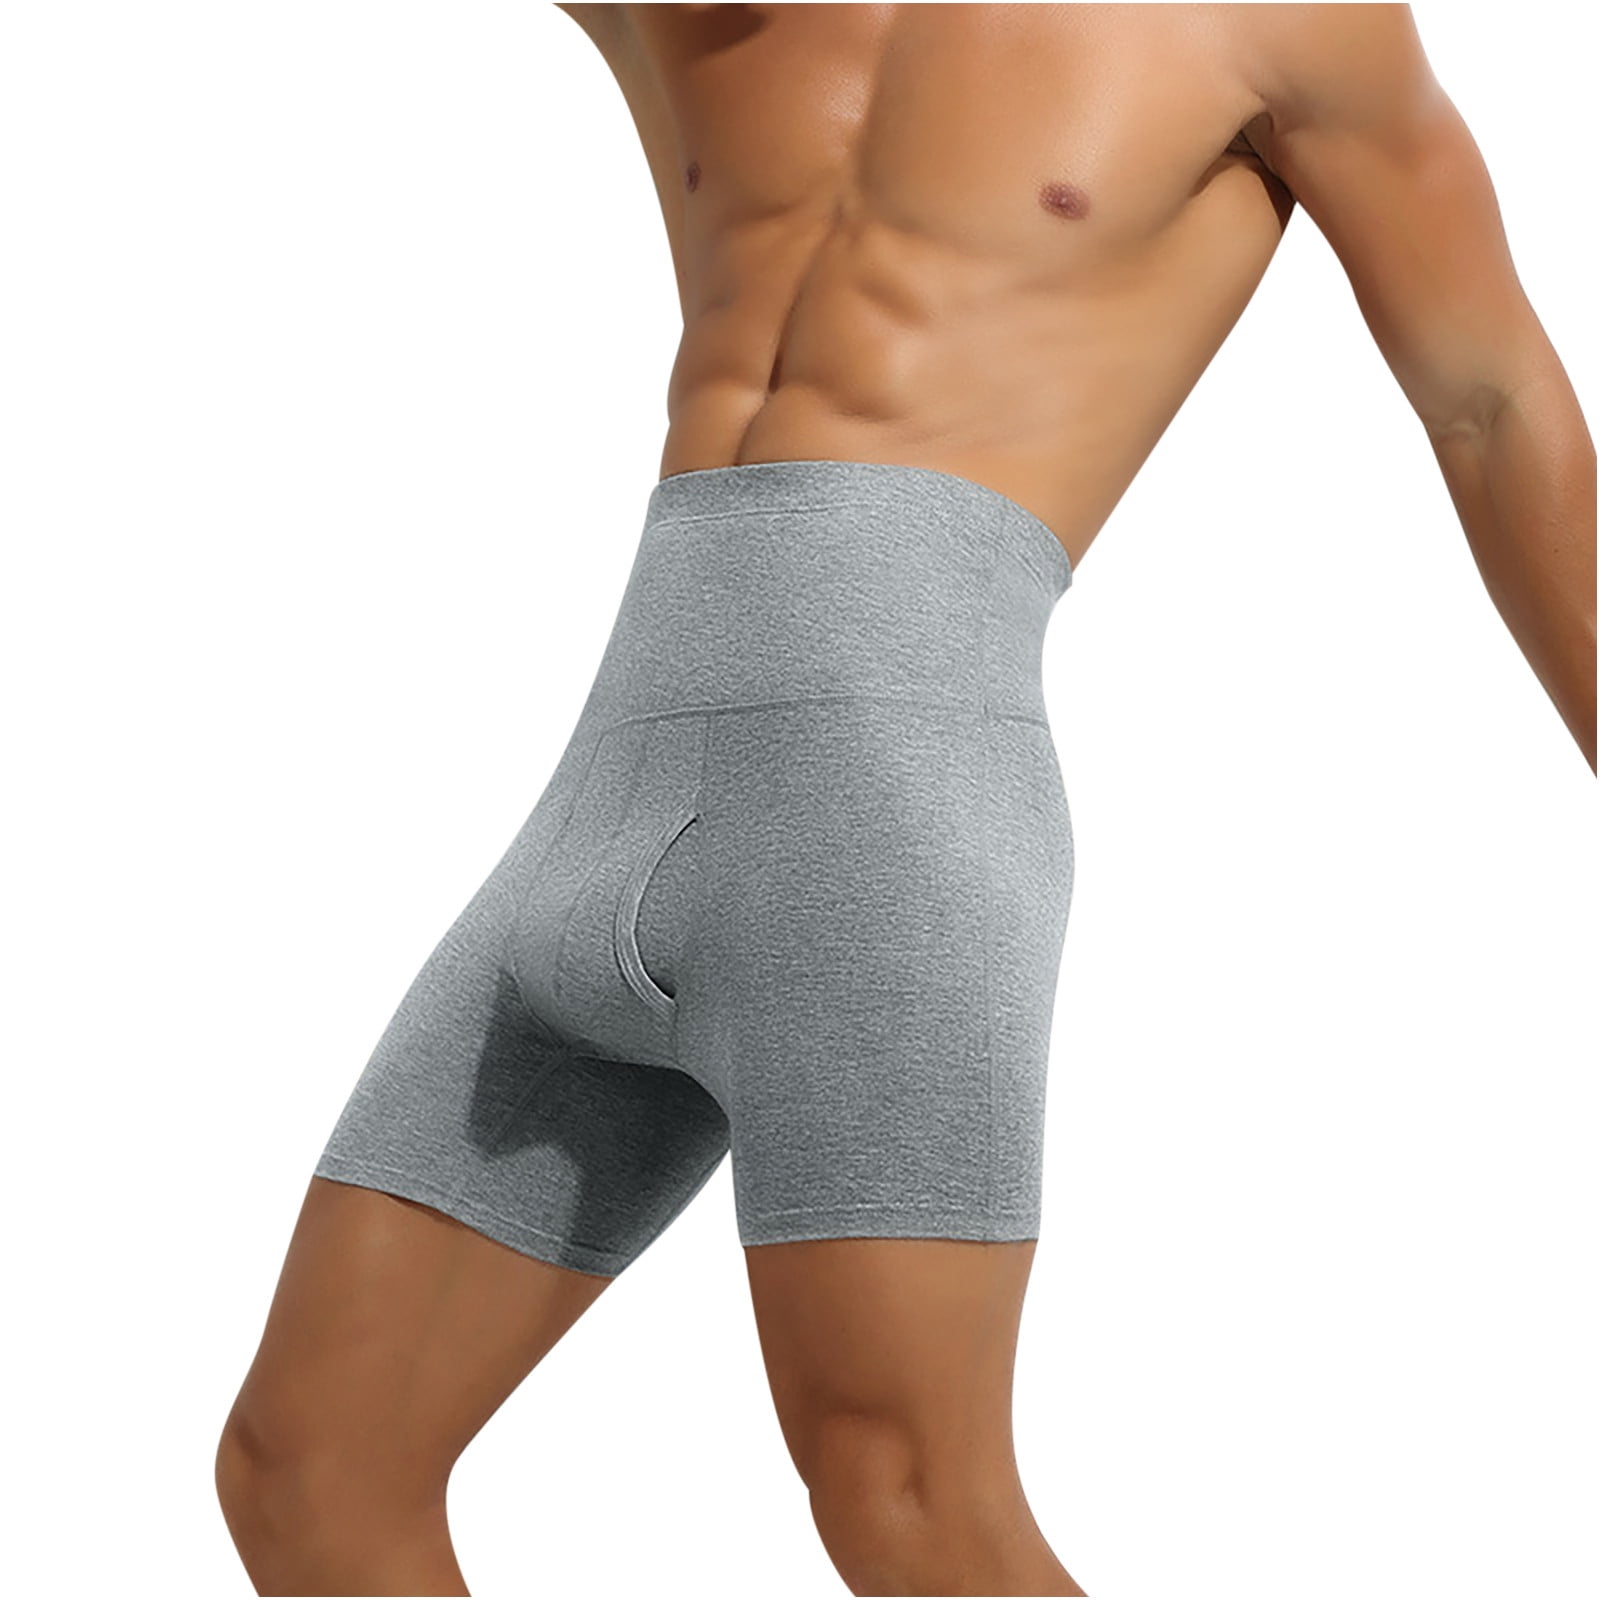 Men's Compression High Waist Boxer Shorts Belly Control Girdle